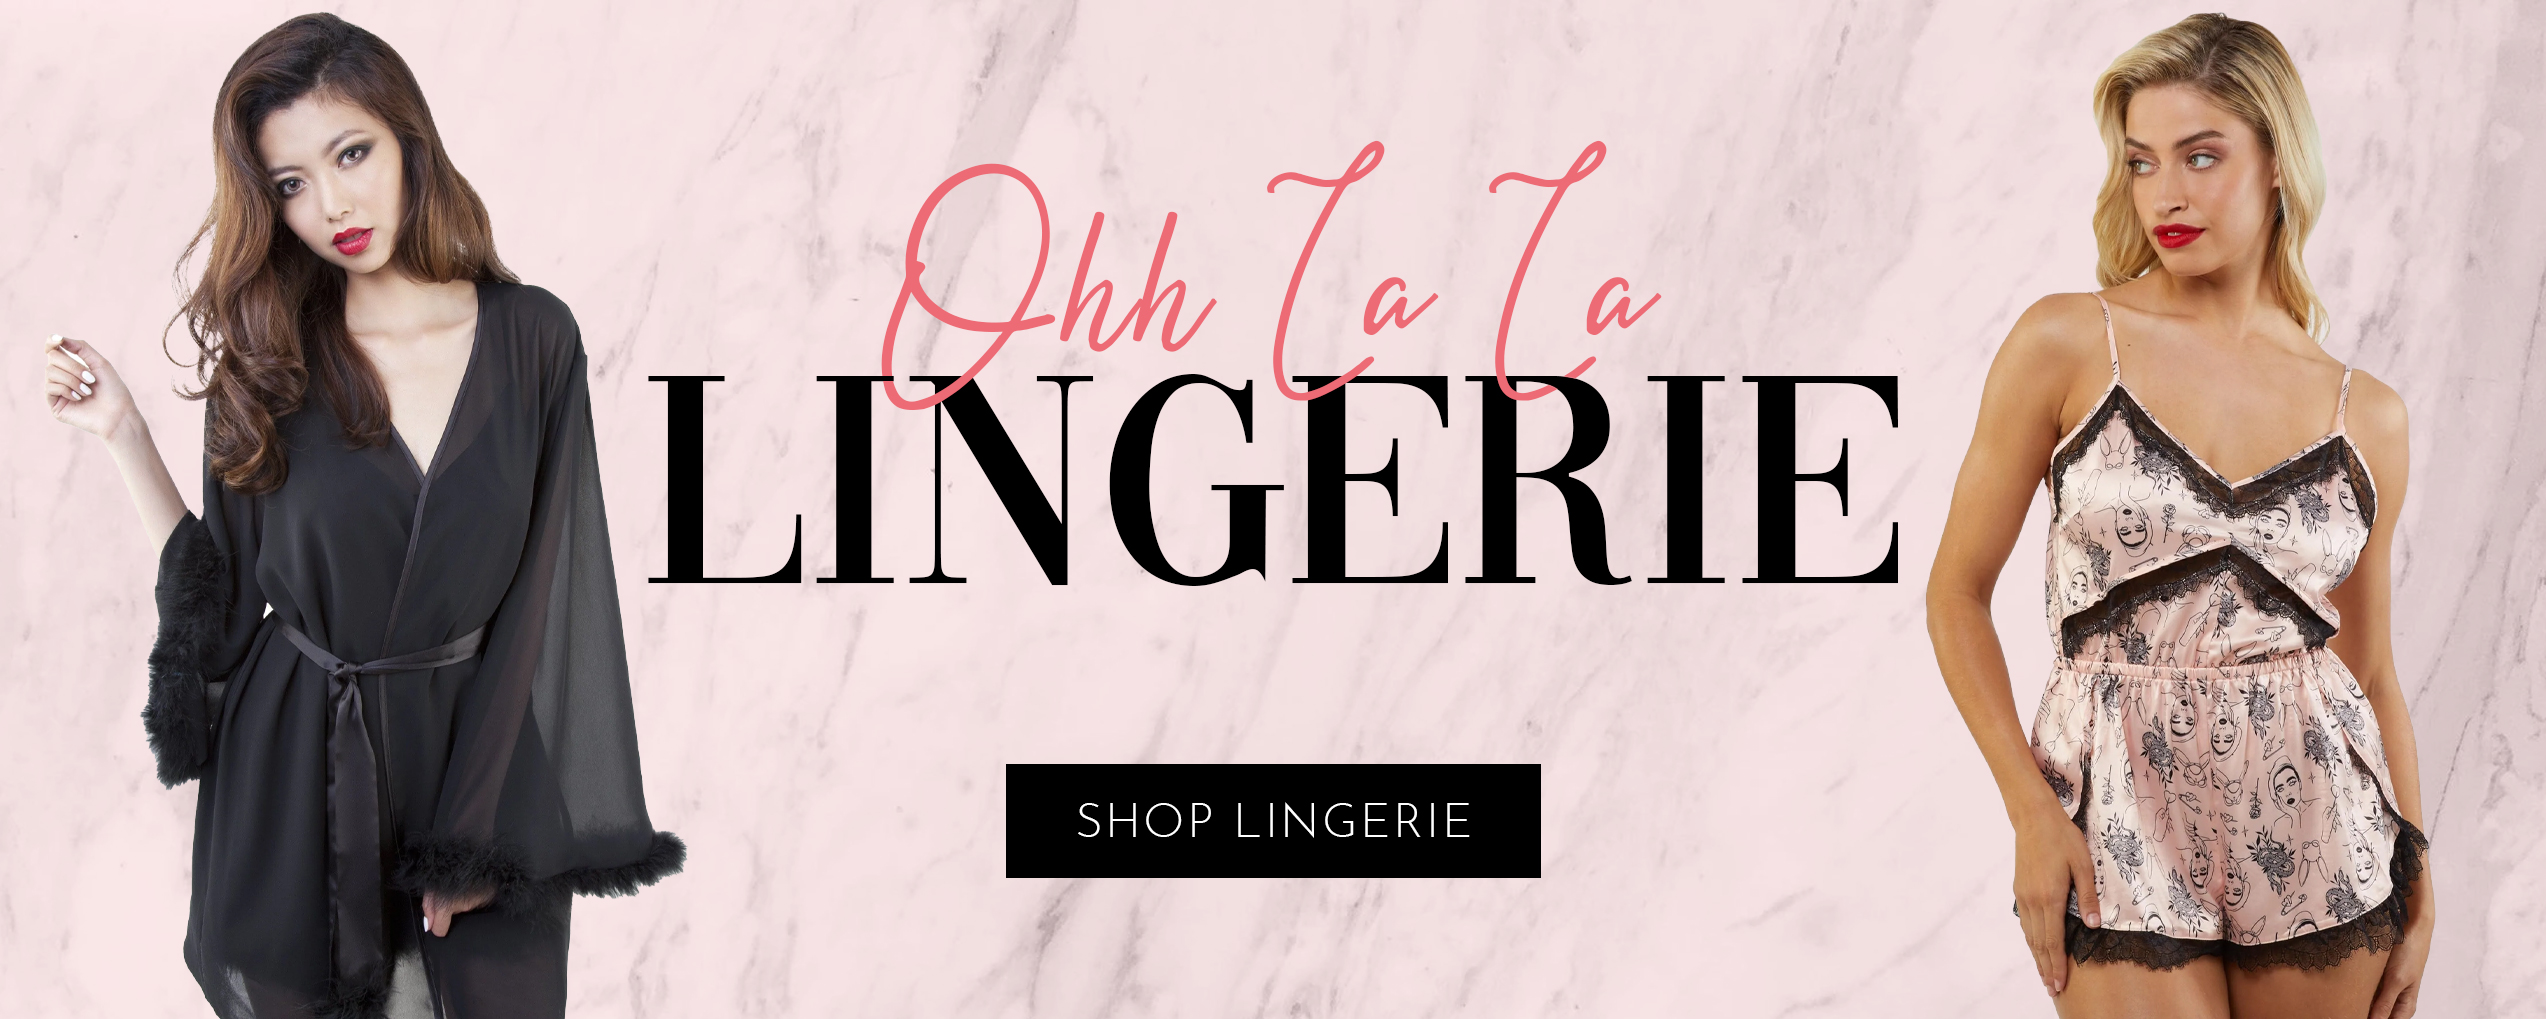 Royal Blue Lingerie - Shop on Pinterest